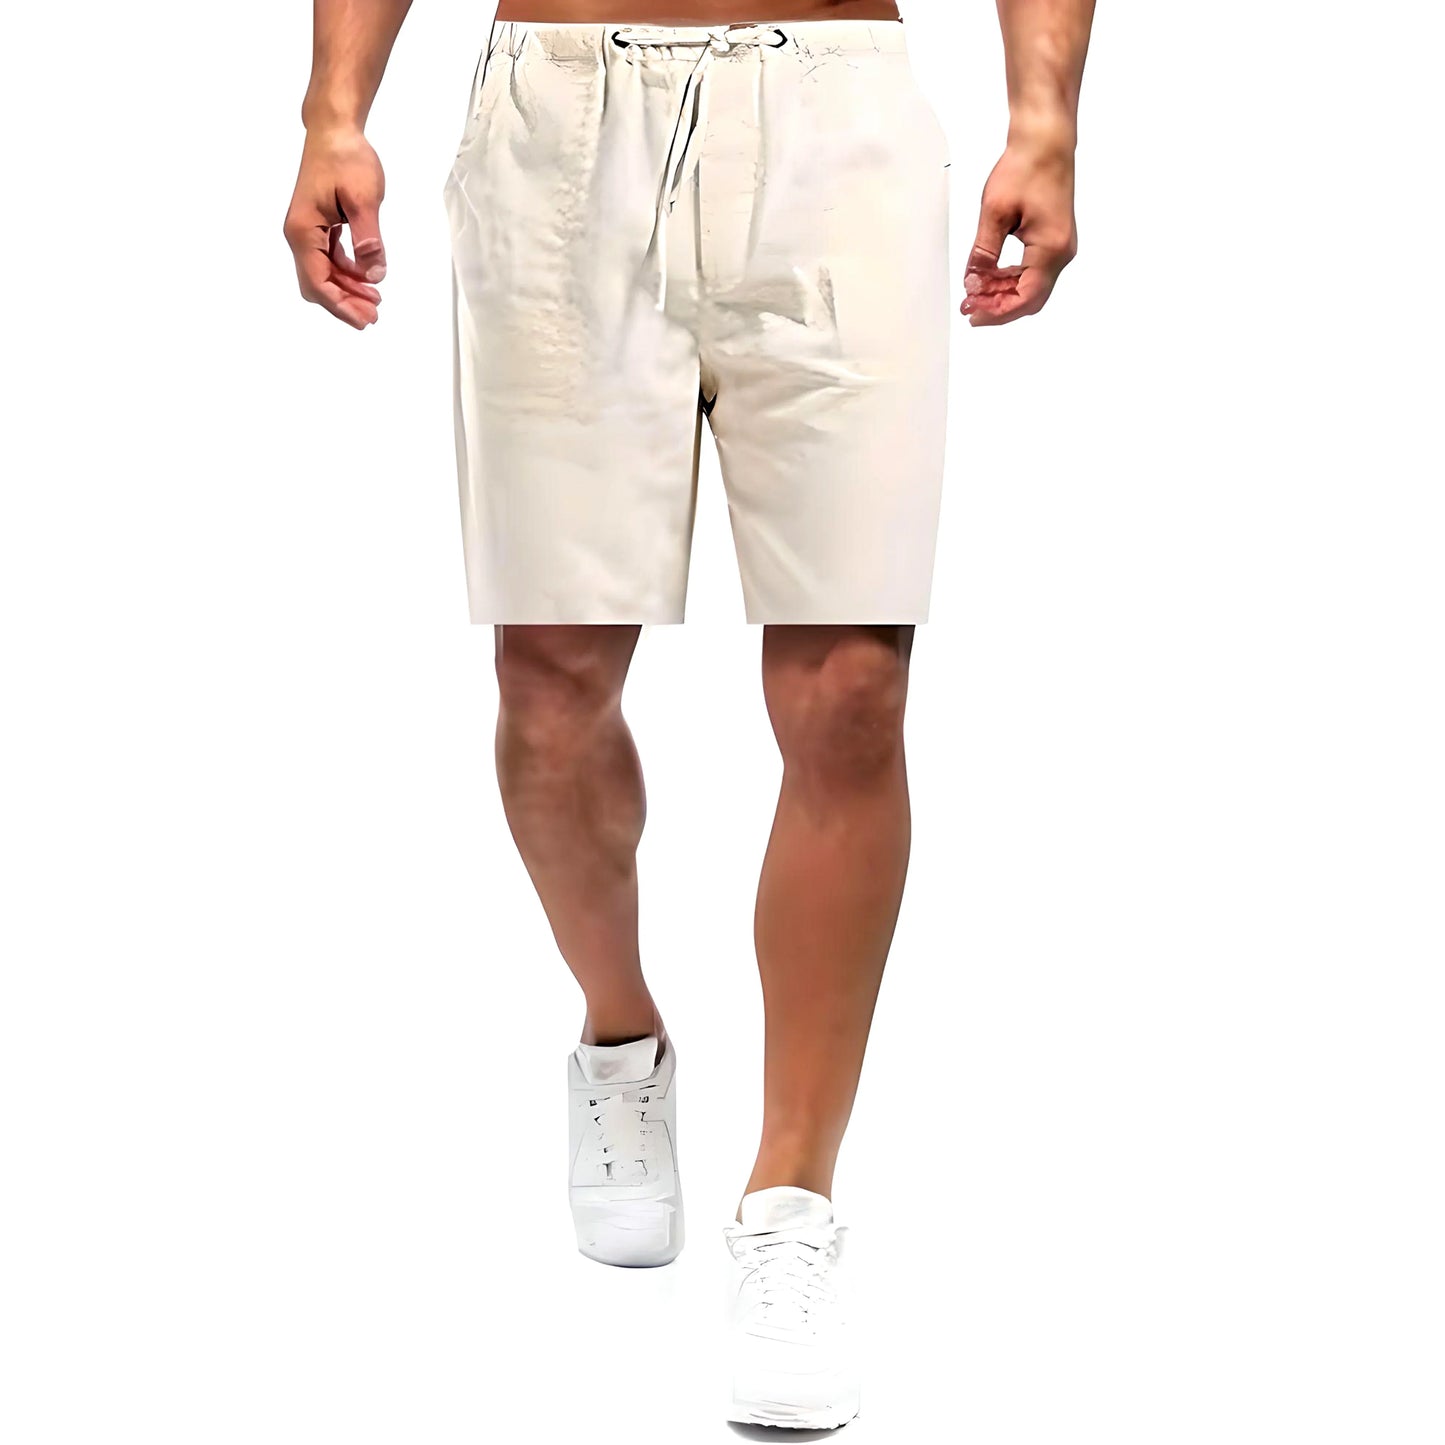 Charles | Casual Linen Shorts